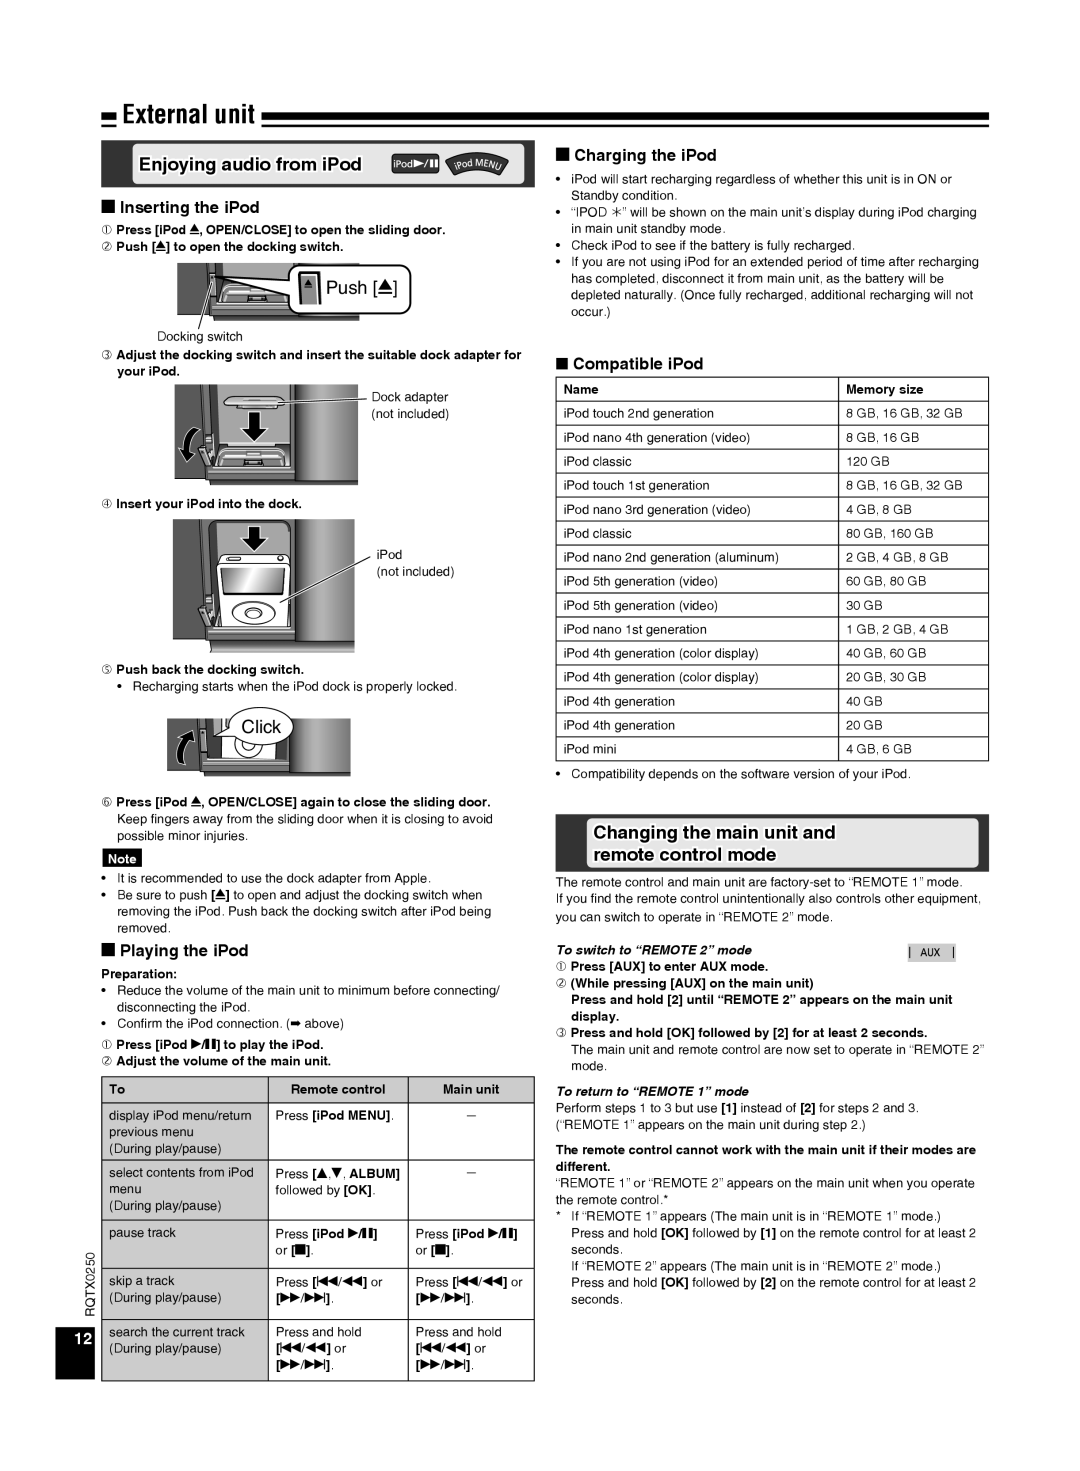 Panasonic SC-HC3 External unit, Enjoyingaudio from iPod, Push, Click, Changing the main unit and remote control mode 